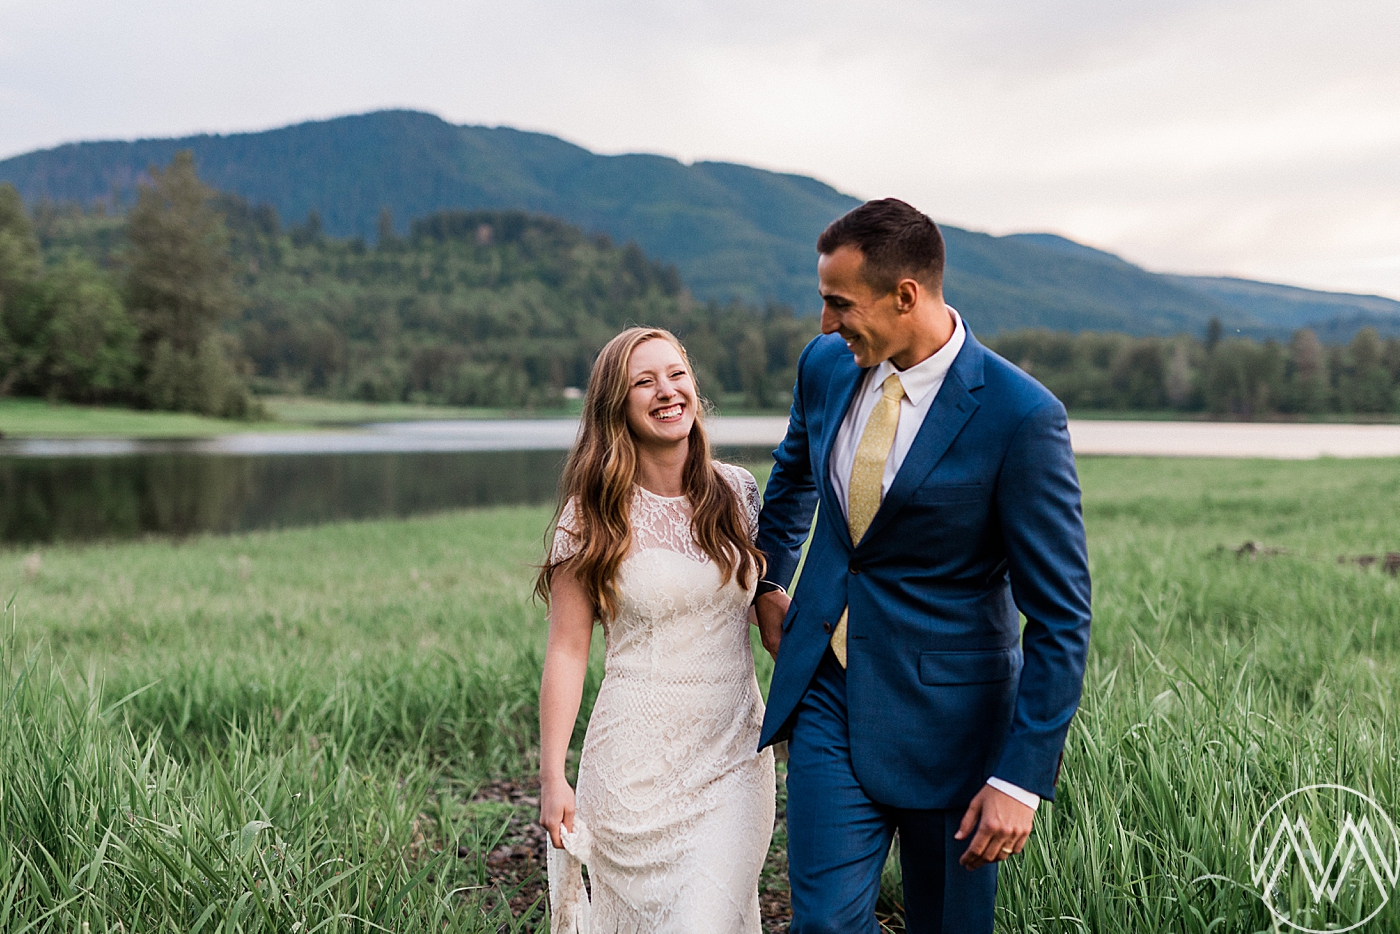 PNW Adventure Elopement in Washington State at Mt. Rainier. Photographed by Wedding Photographer, Megan Montalvo Photography. 